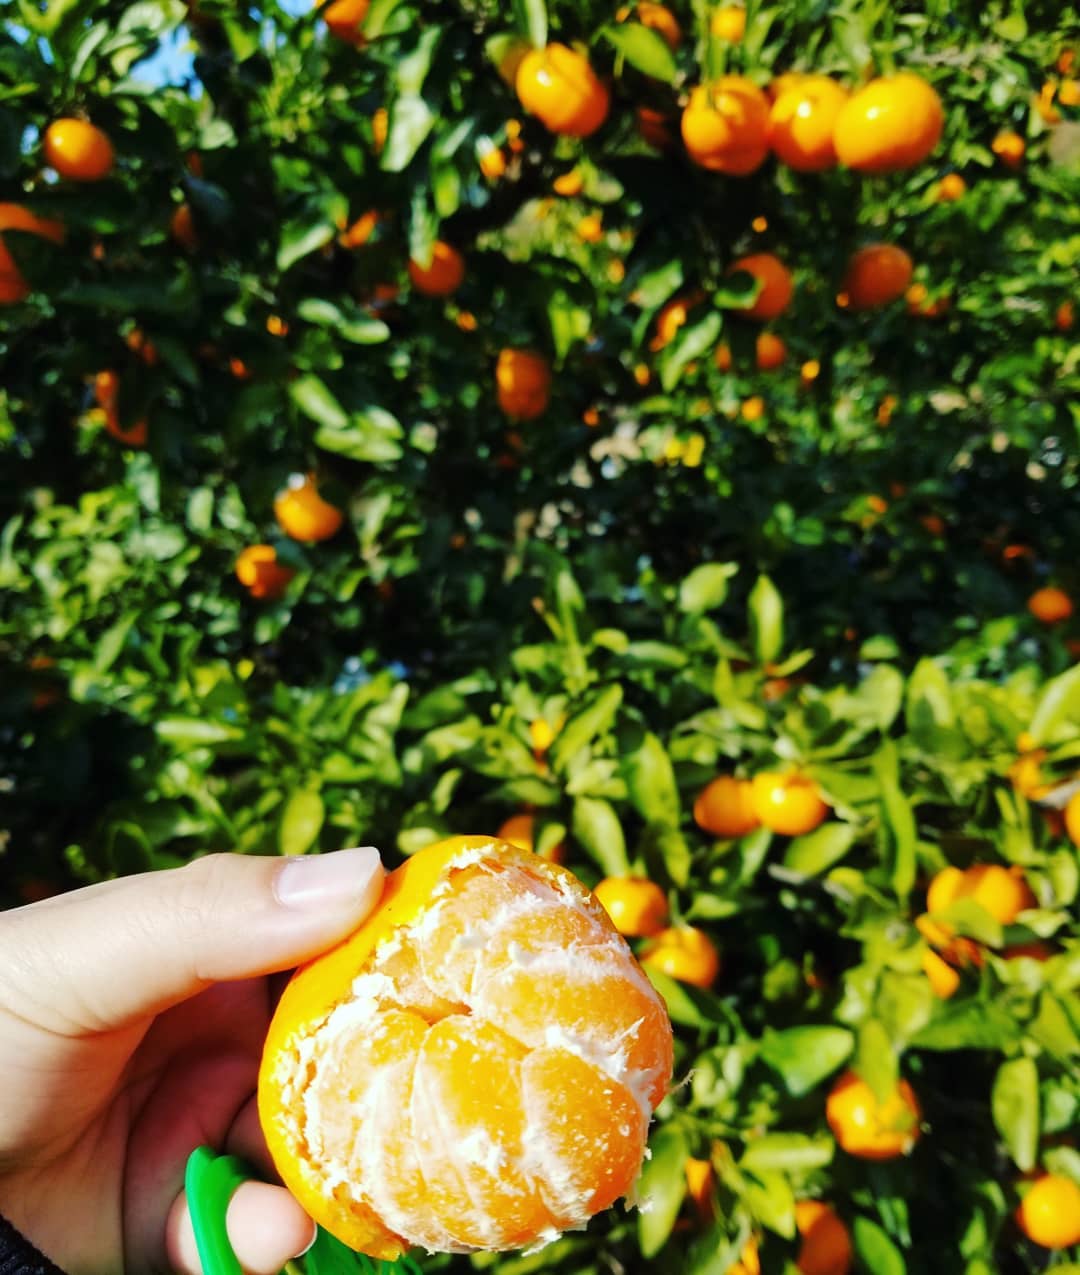 Go fruit-picking at the Gamagori Orange Park to get a taste of Gamagori’s famous Mikan mandarin oranges.